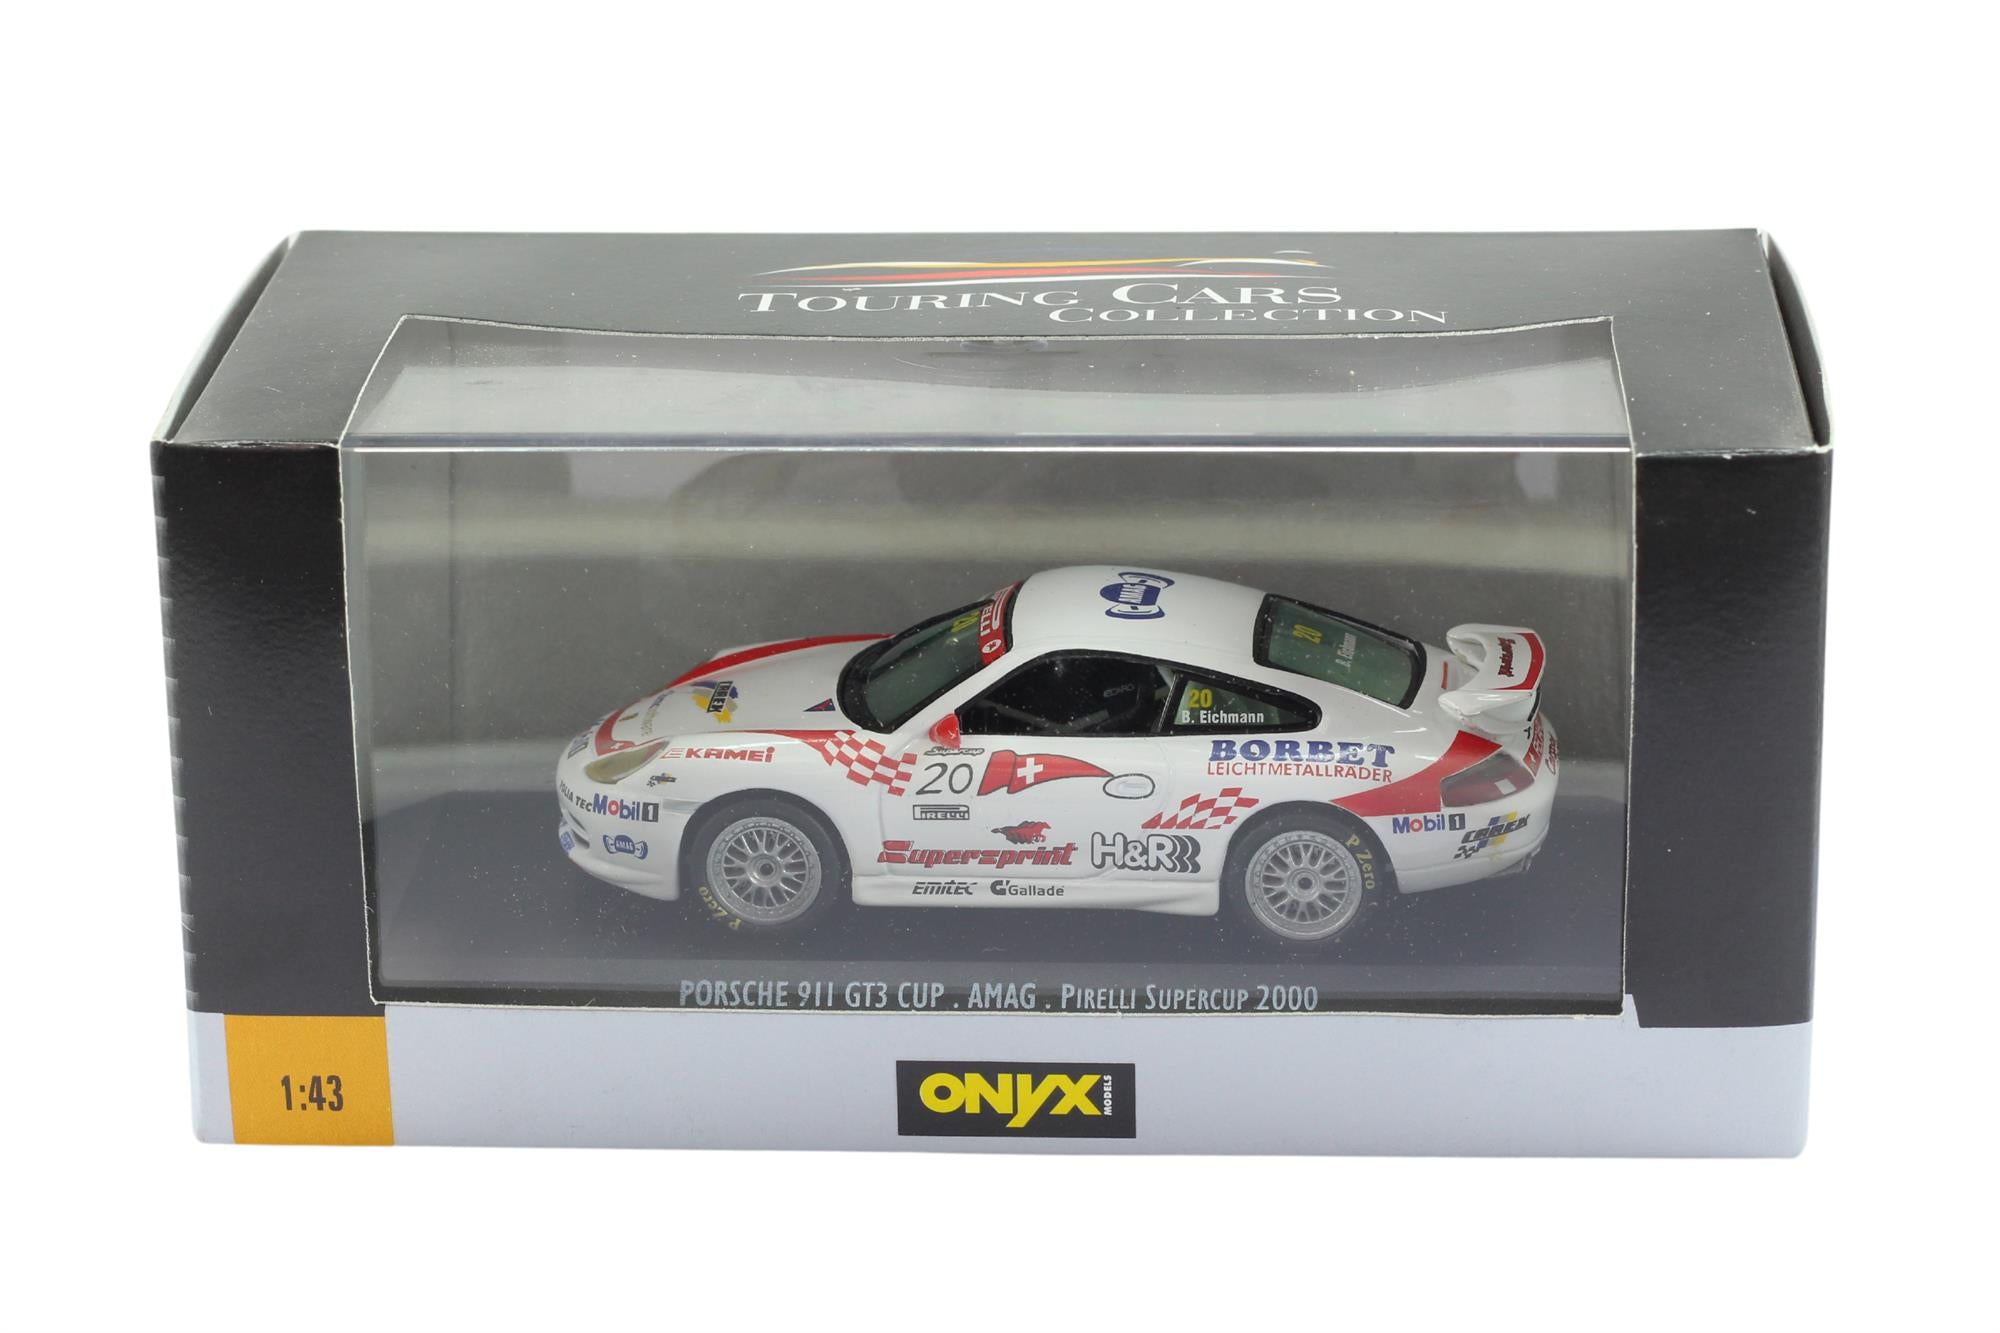 Onyx Models - 1:43 Scale Diecast Porsche 911 GT3 Cup - Pirelli Supercup 2000 - Bruno Eichmann - Toptoys2u